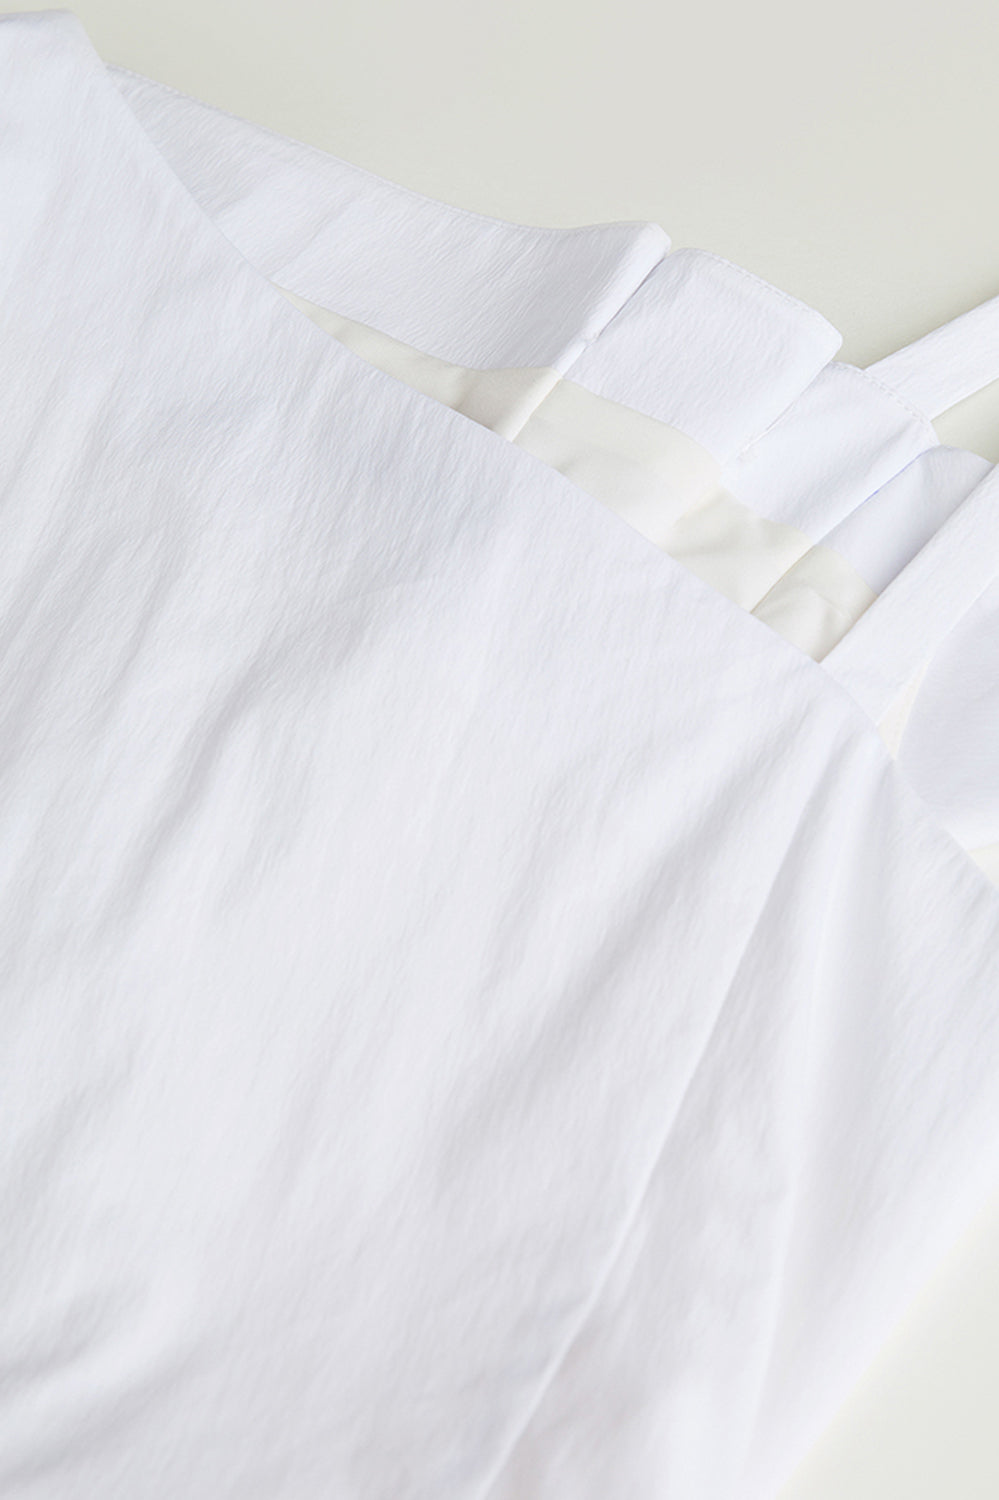 Irregular Midi Dress - White